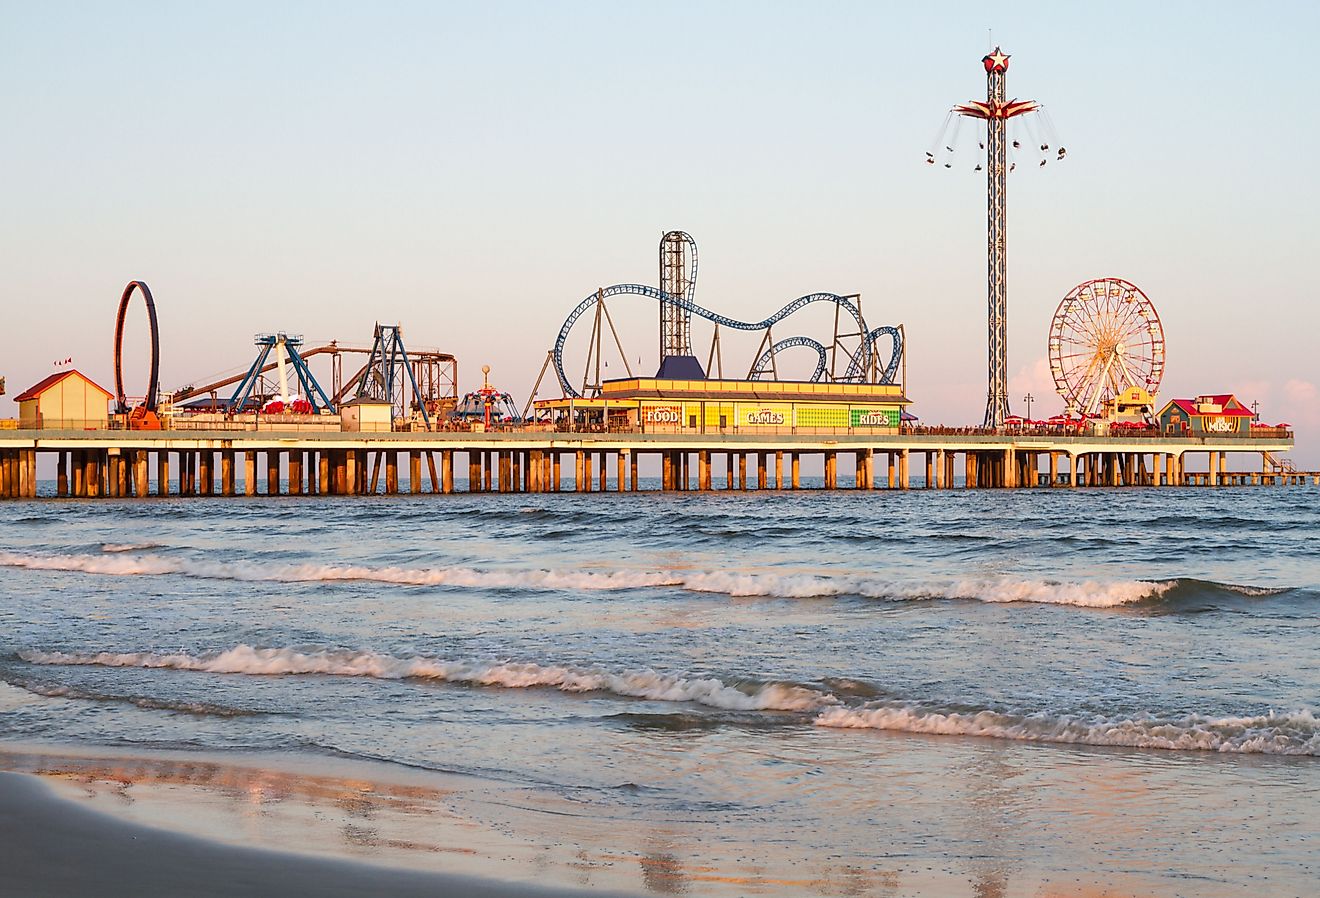 Galveston Island and beach with theme park on the pier. Image credit Carlos Bruzos Valin via Shutterstock.